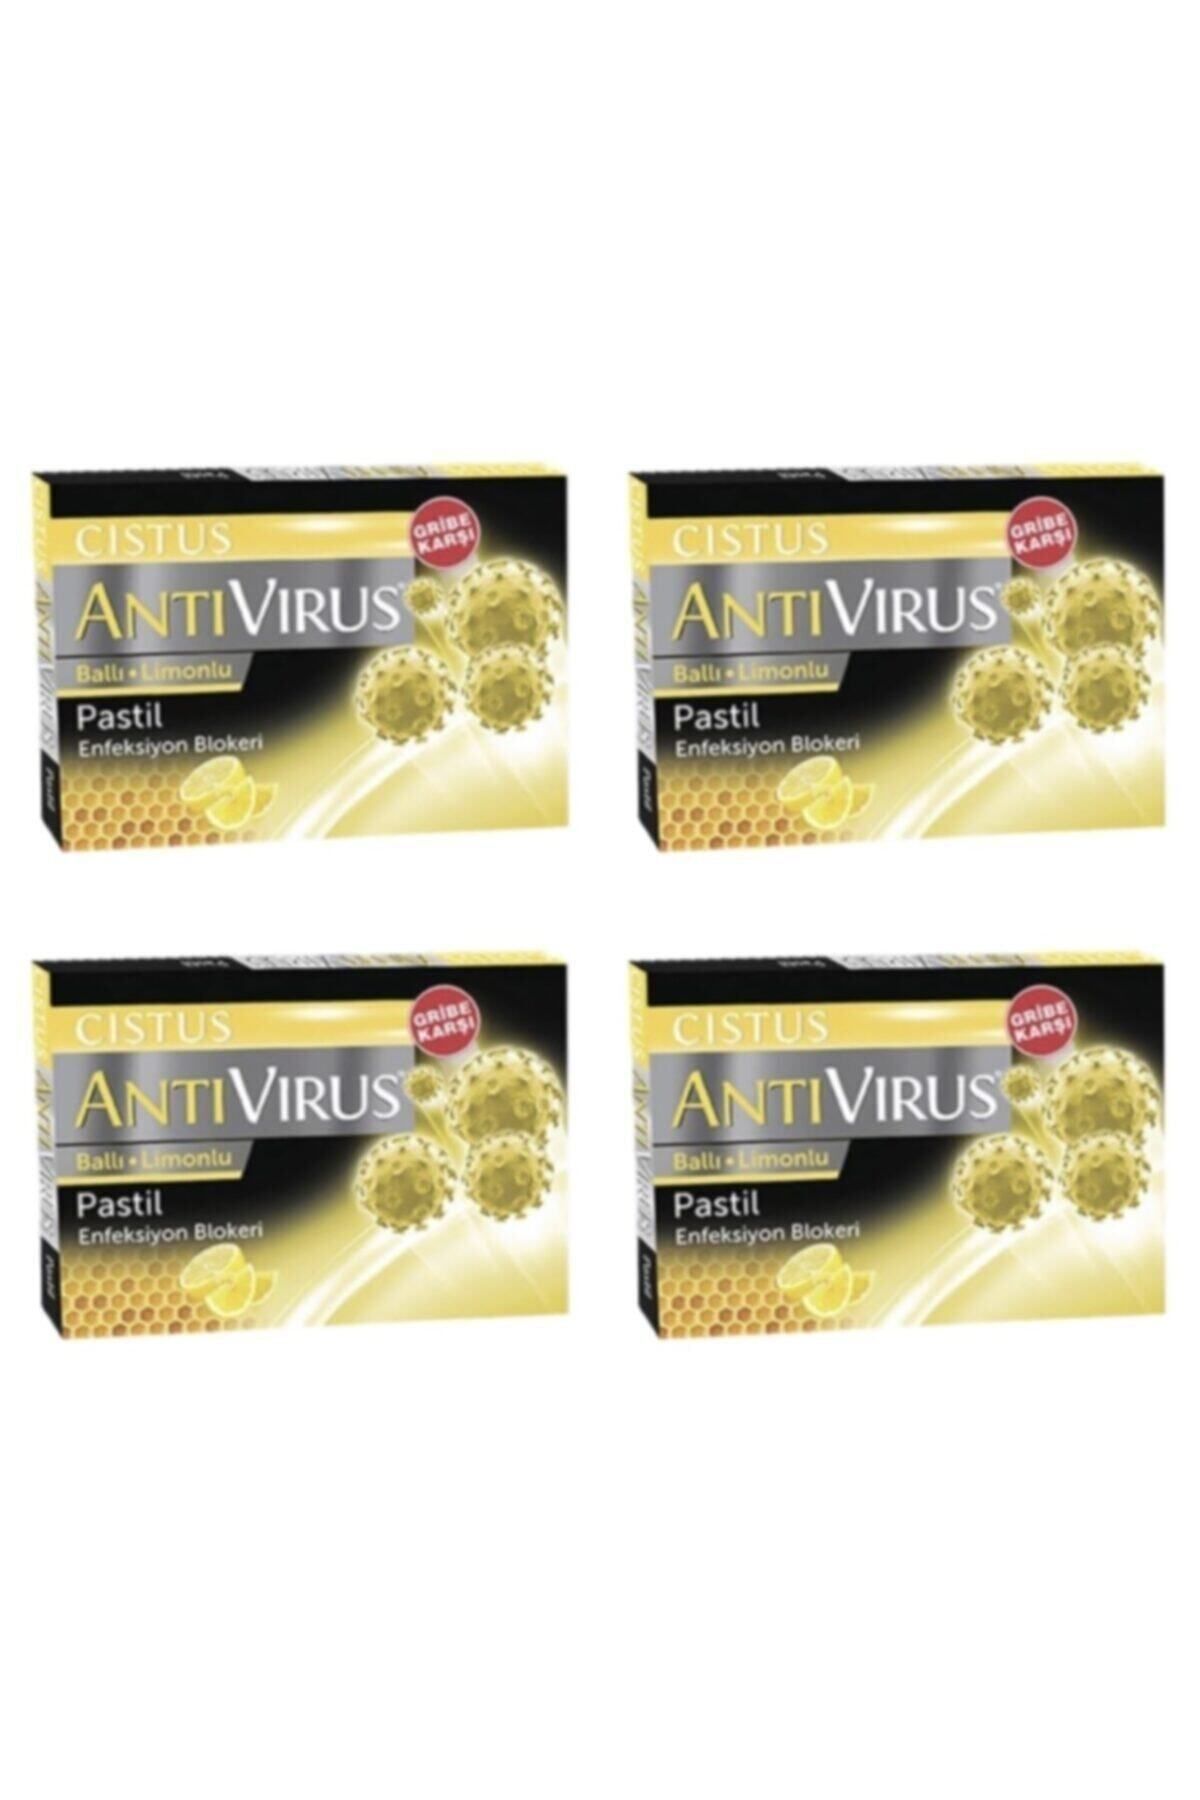 CISTUS Antivirus Pastil Ballı Limonlu 4 Adet